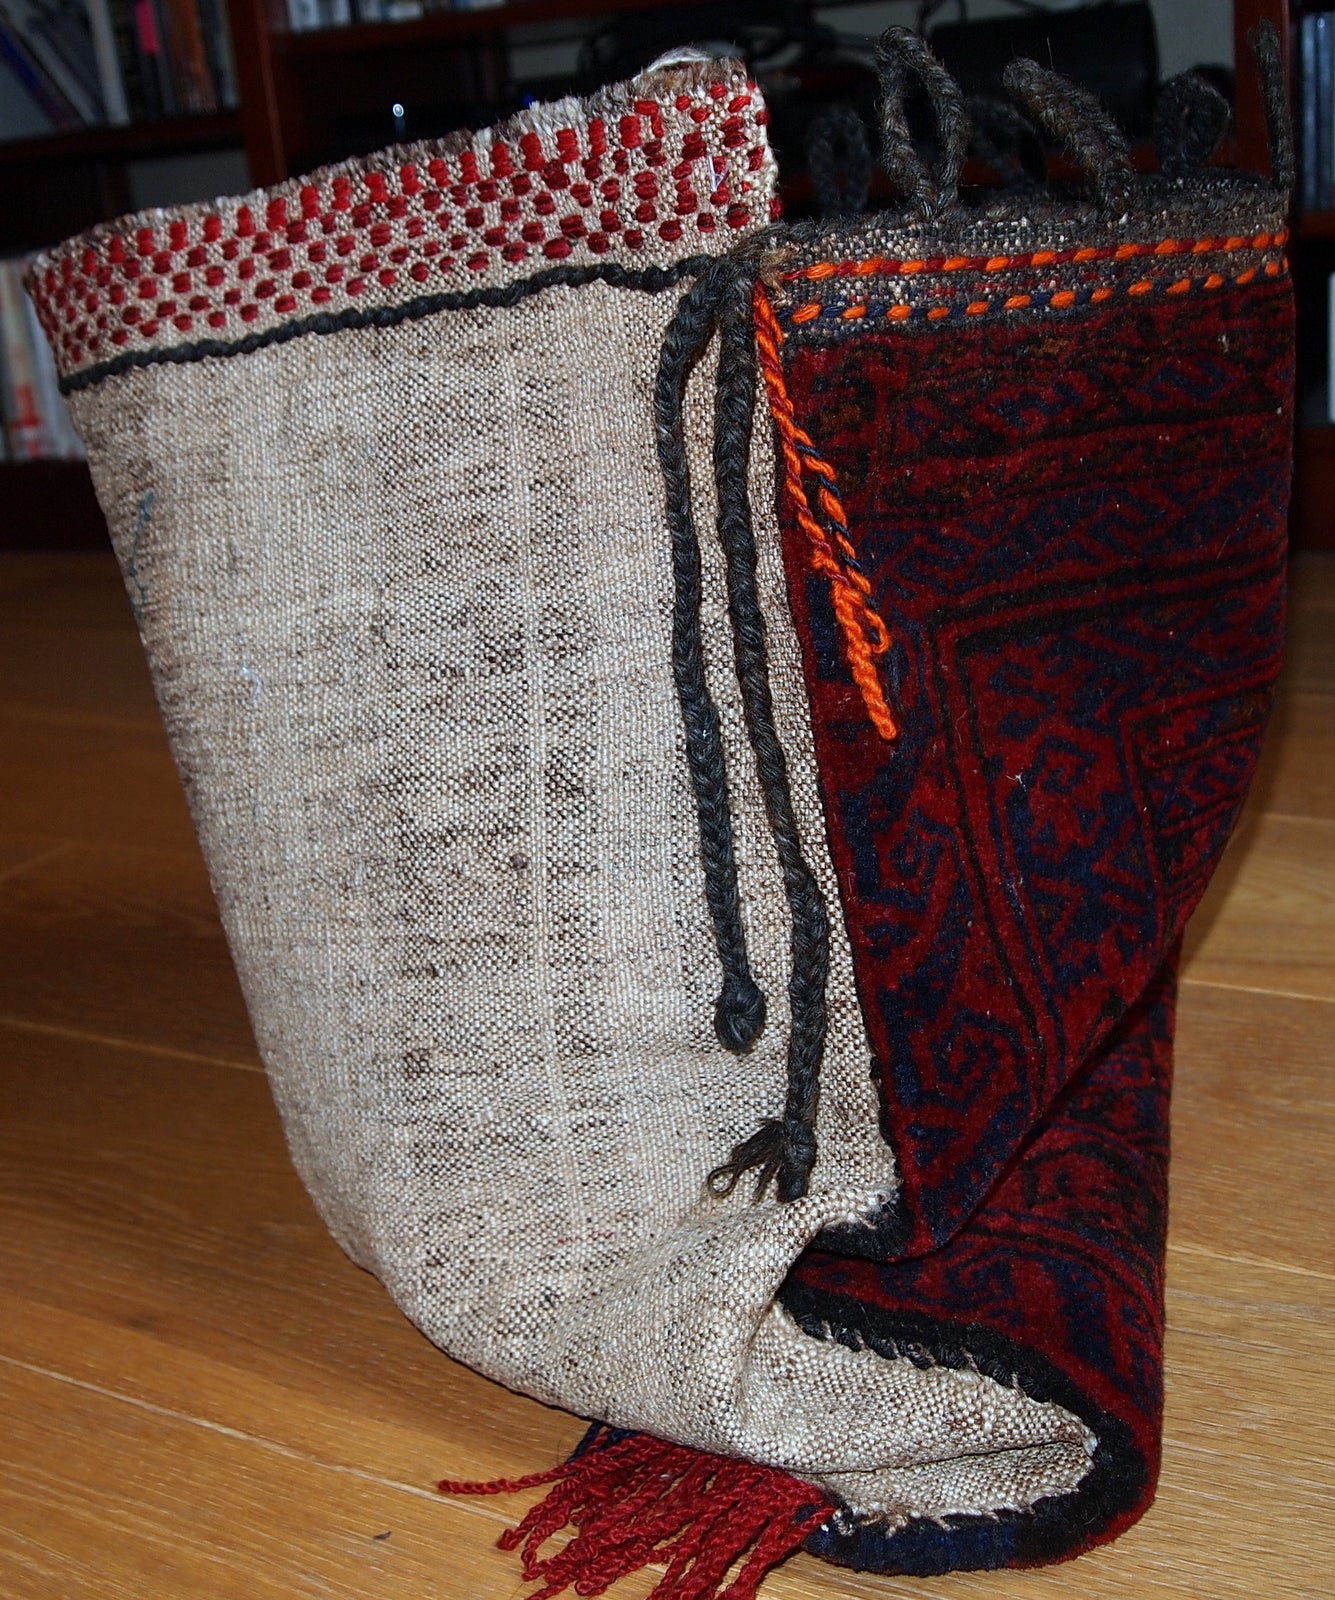 Handmade antique collectible Uzbek salt bag, 1930s